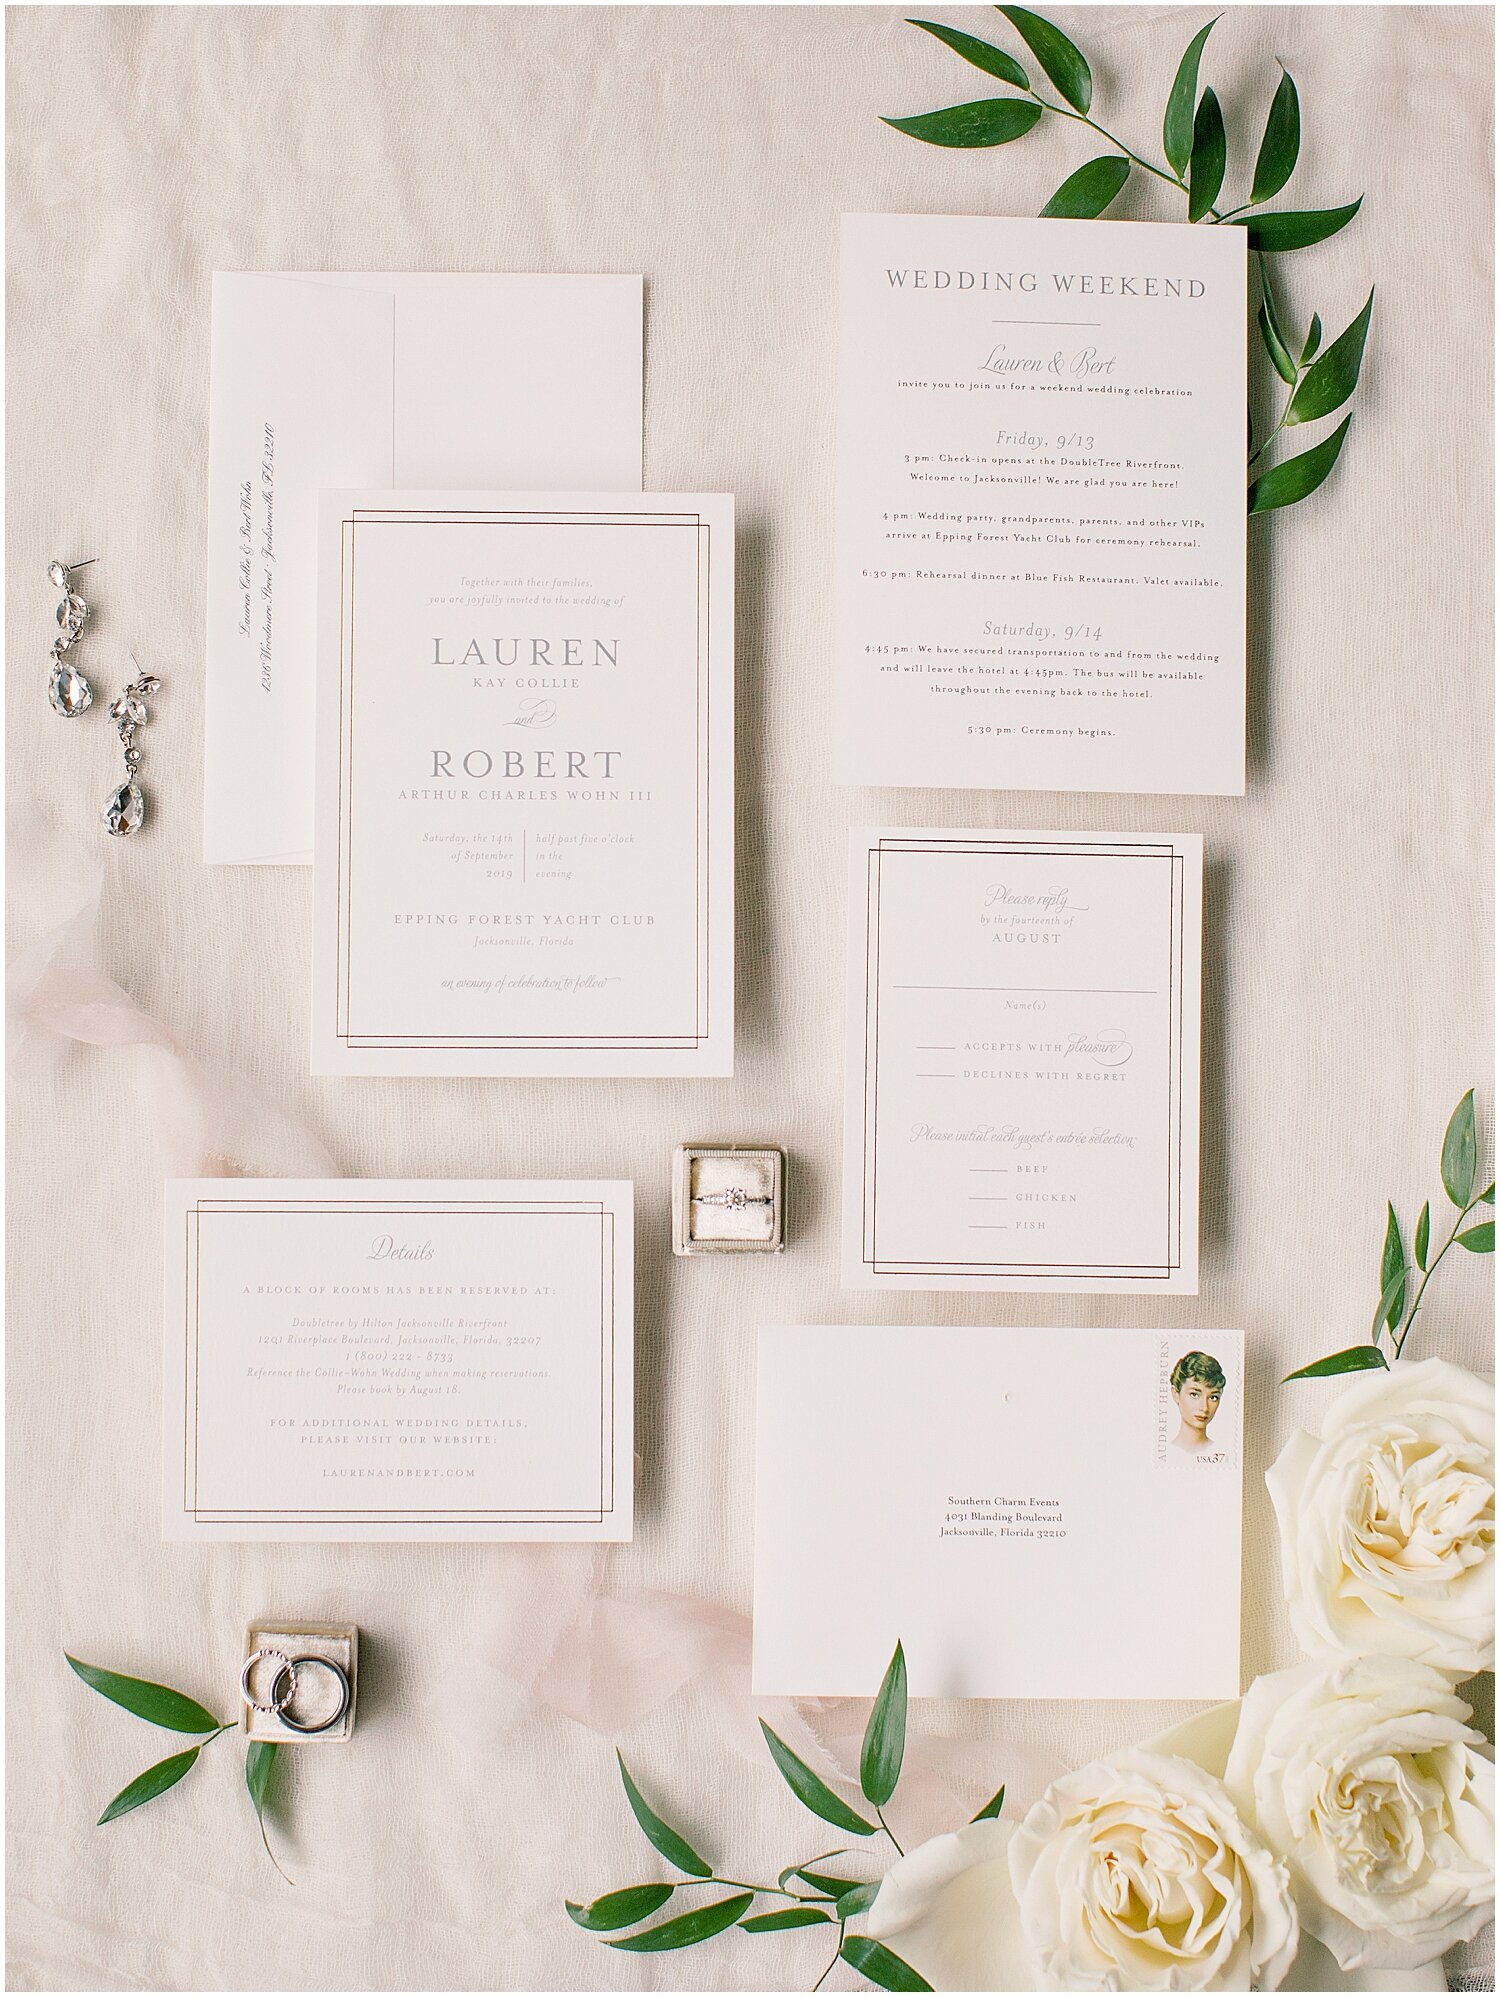  wedding invitation layout 